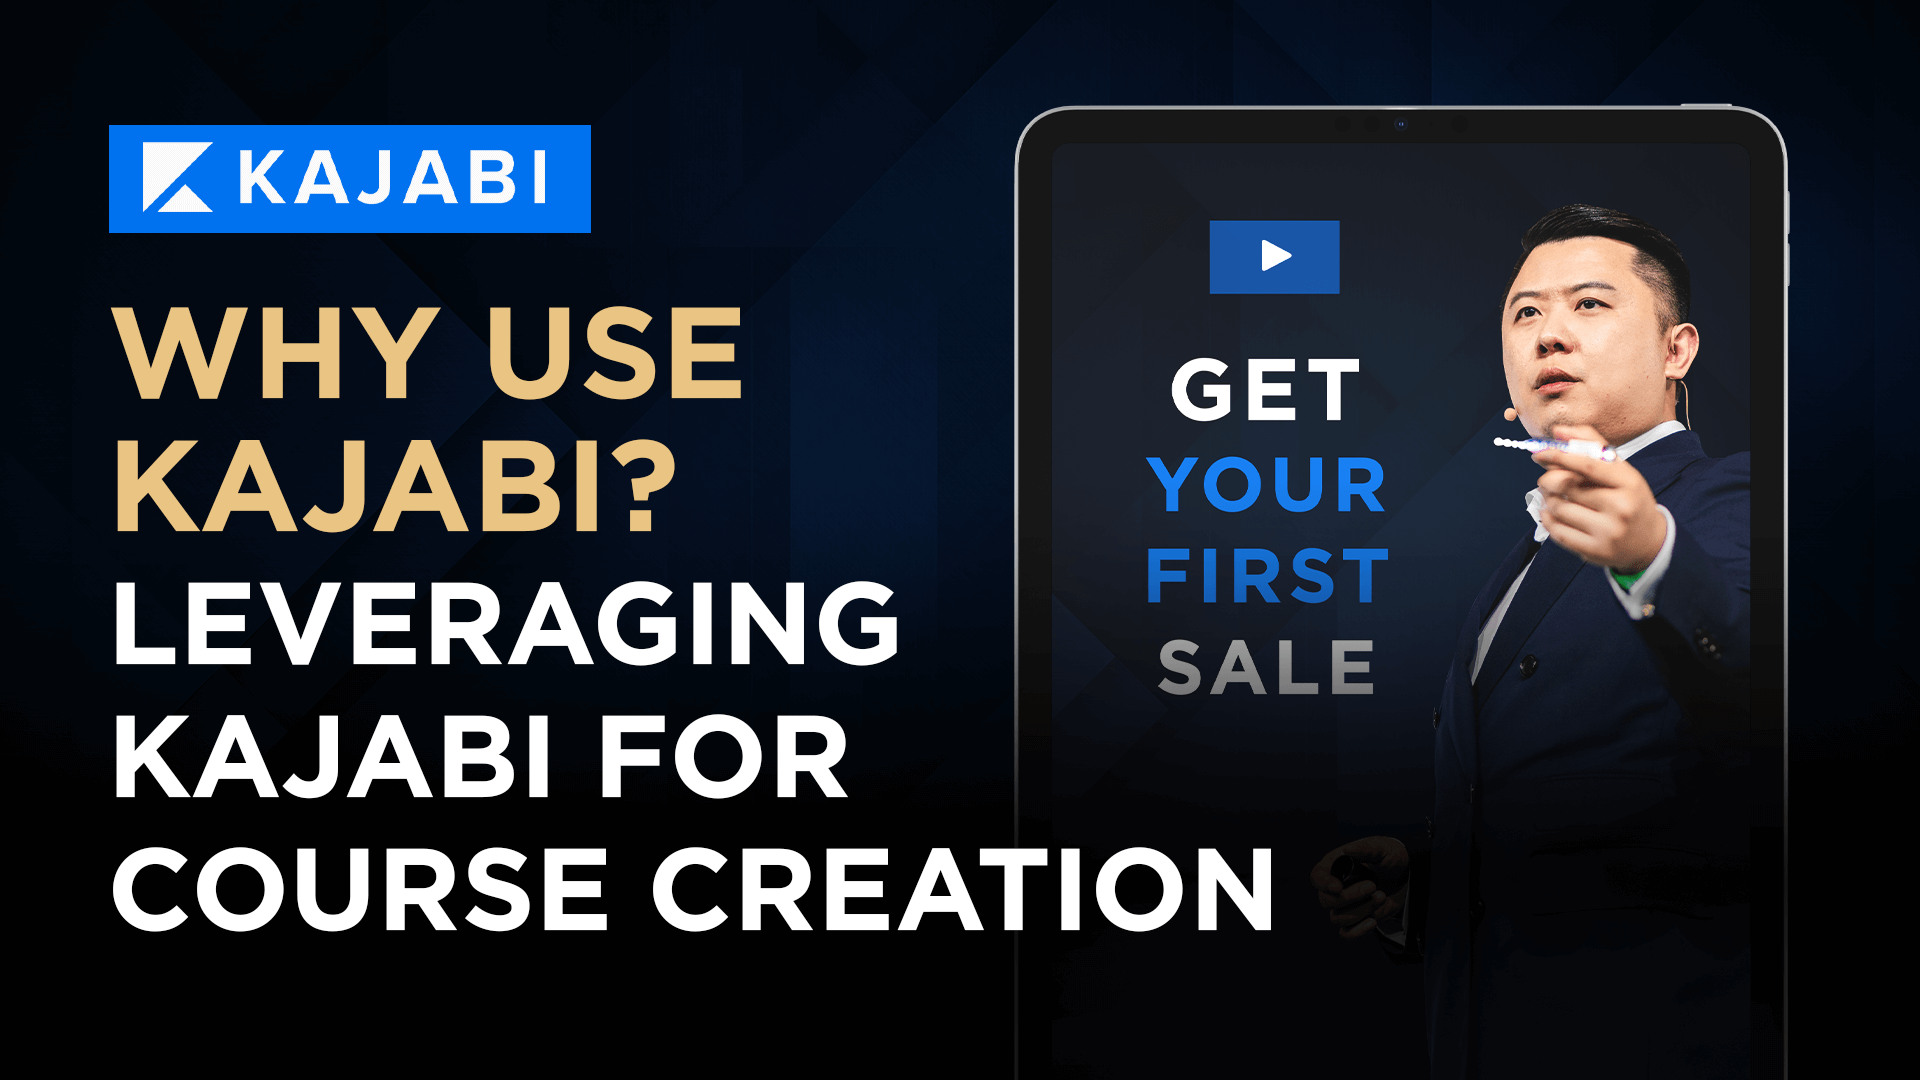 Why Use Kajabi - Leveraging Kajabi for Course Creation